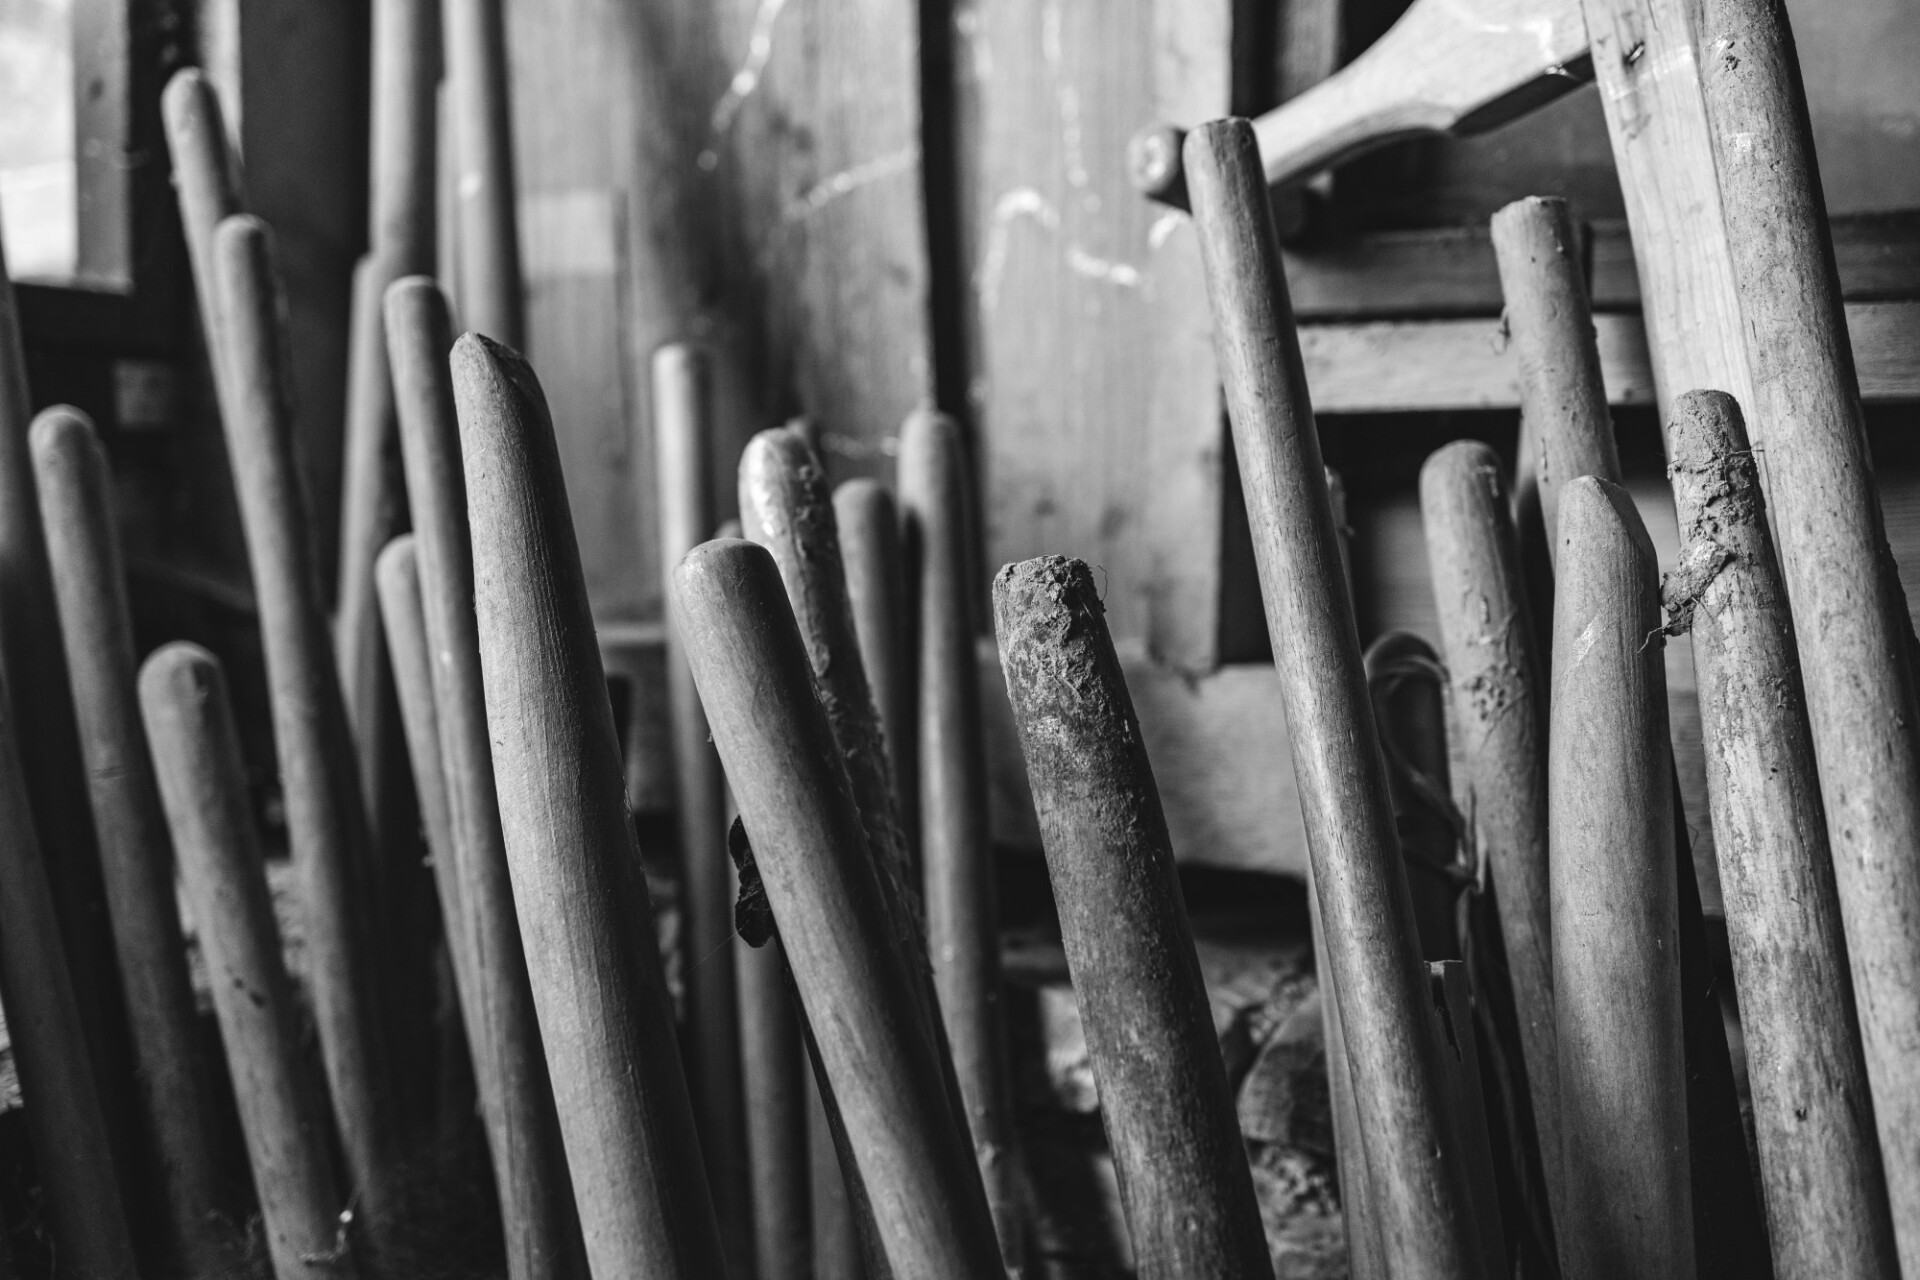 Old broomsticks - Photo #8042 - motosha | Free Stock Photos